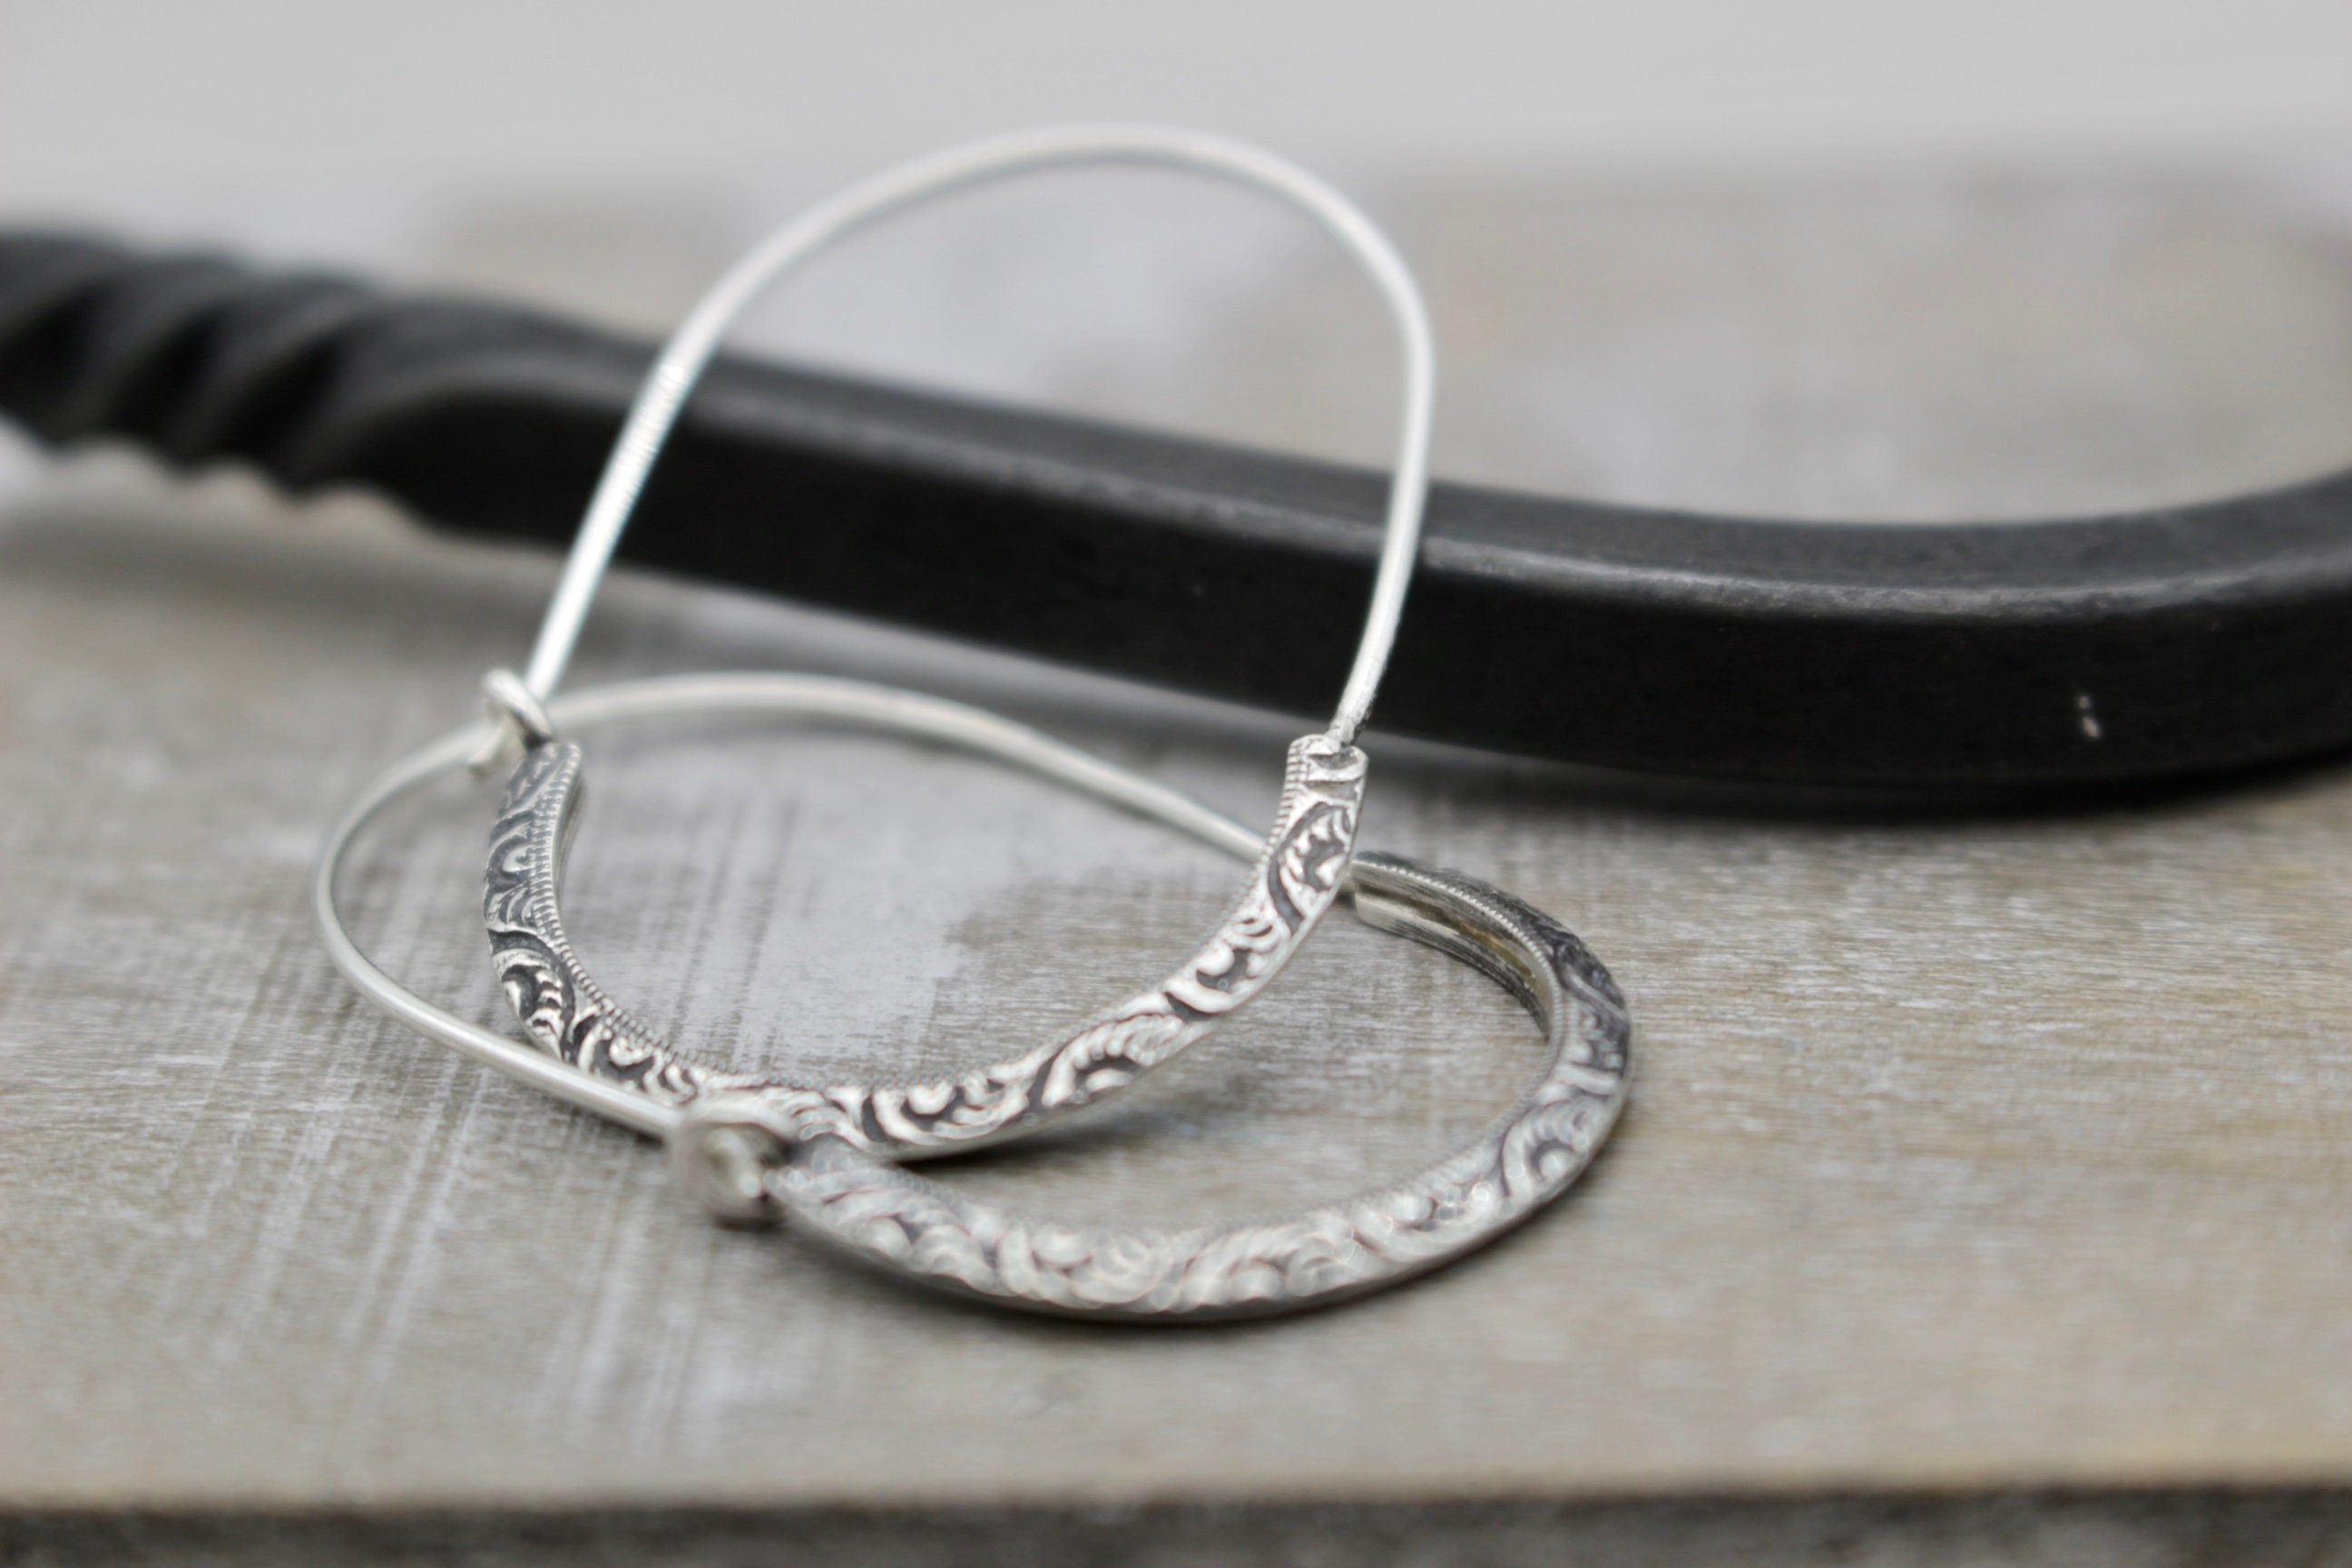 Triangle sterling silver hoop earring - floral triangle  wire - sterling silver hoops - boho hoops - gift for her - jewelry hoop earrings